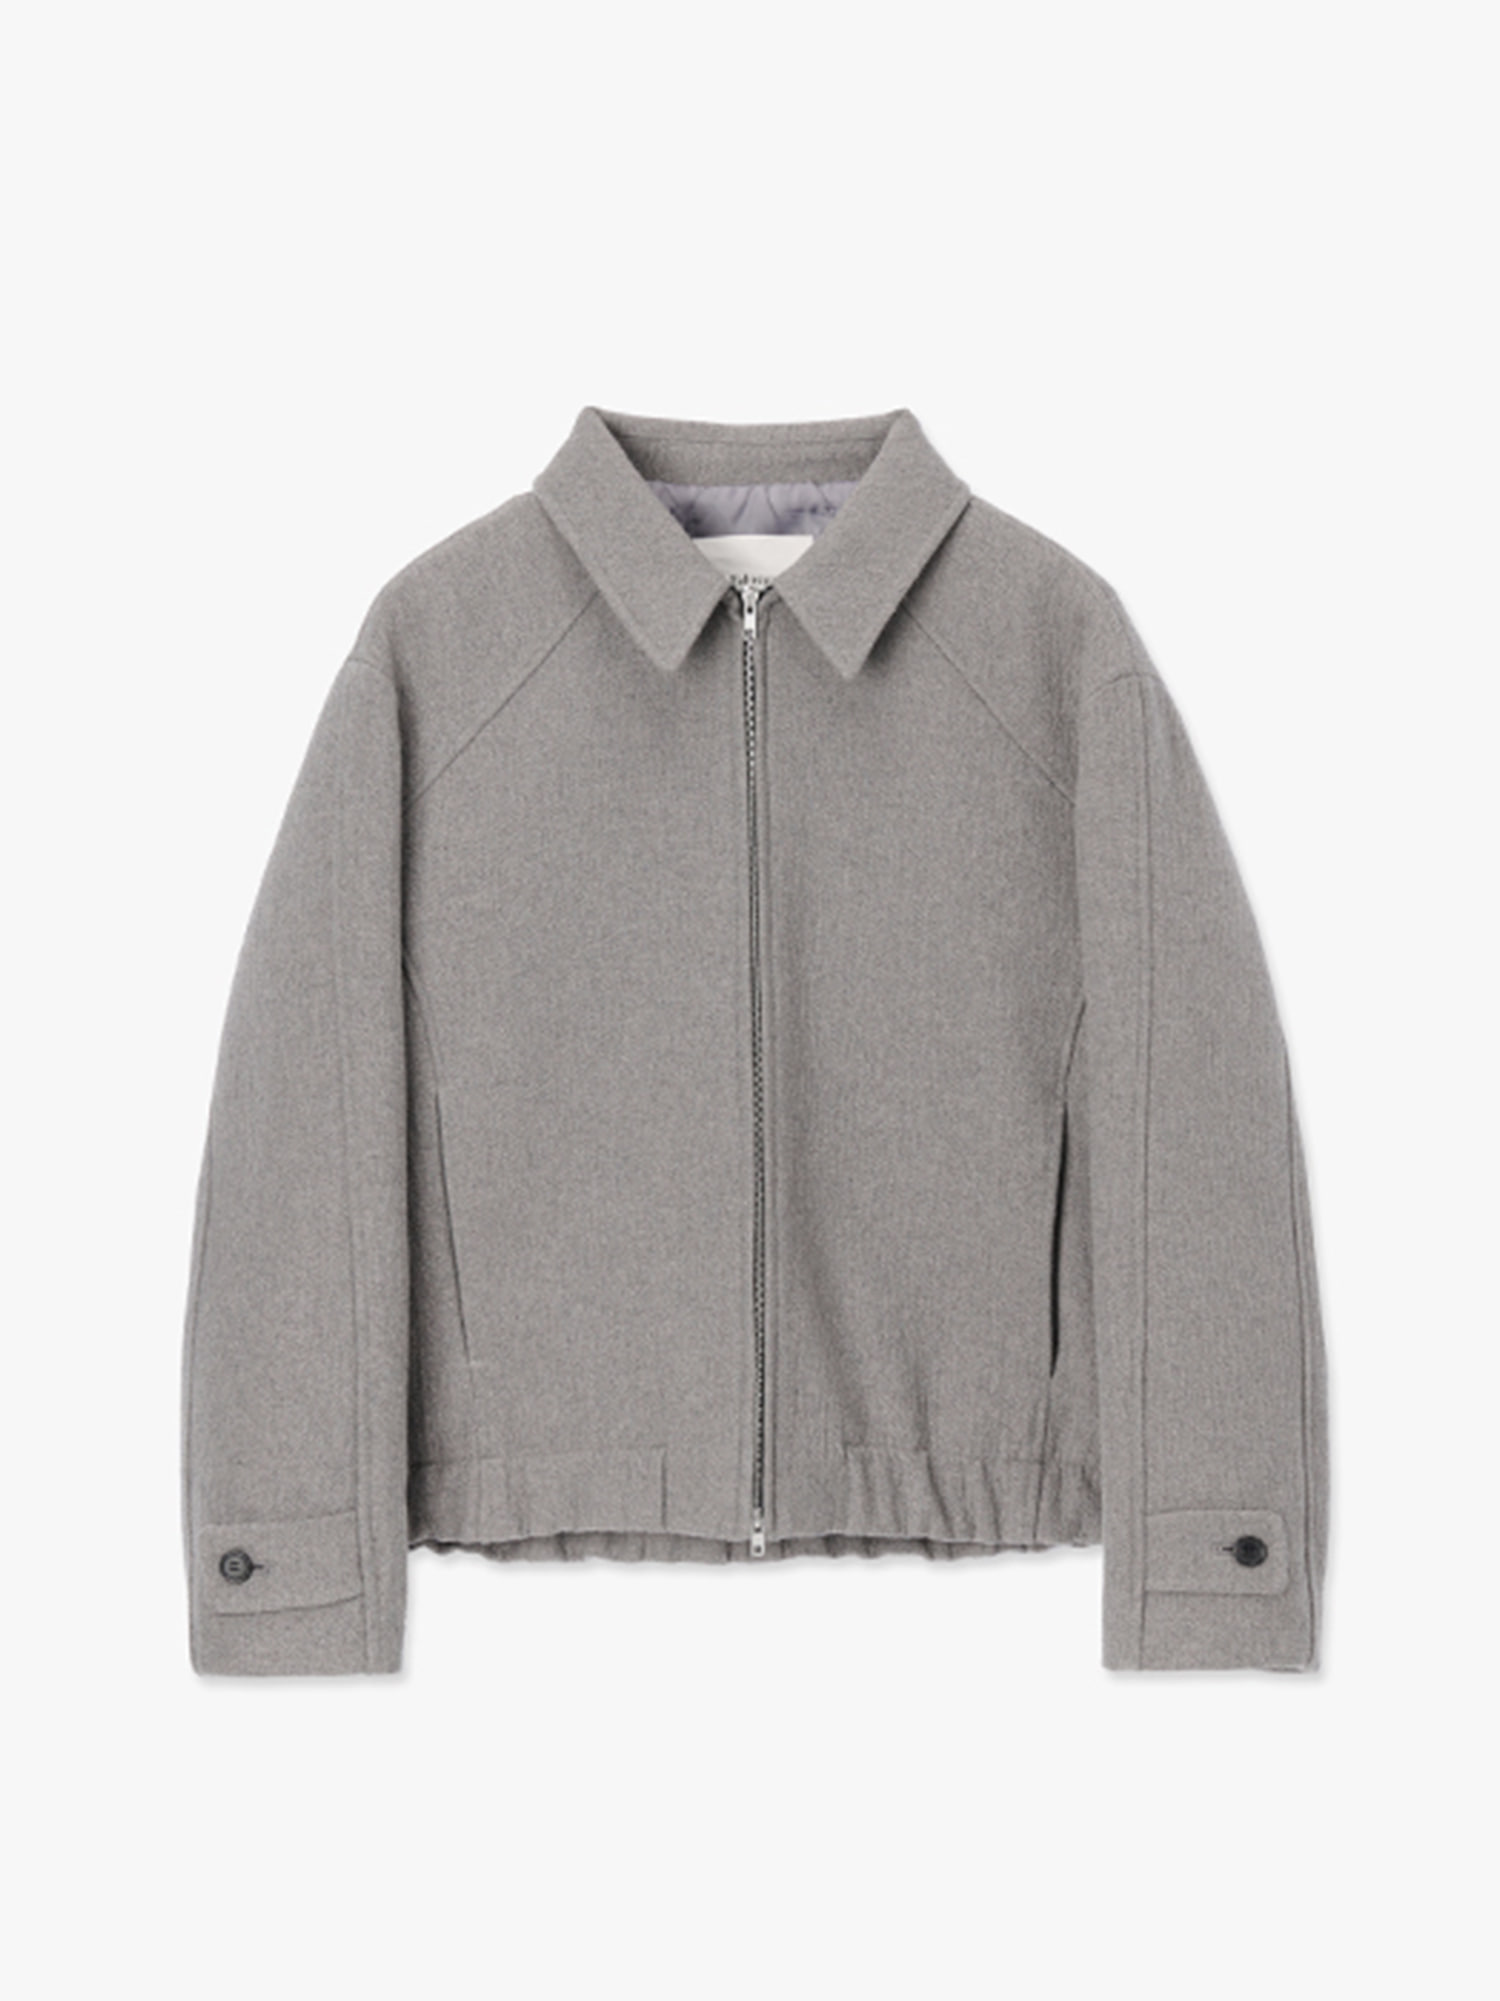 Bumpy Wool Blouson Jacket (Mid Grey)